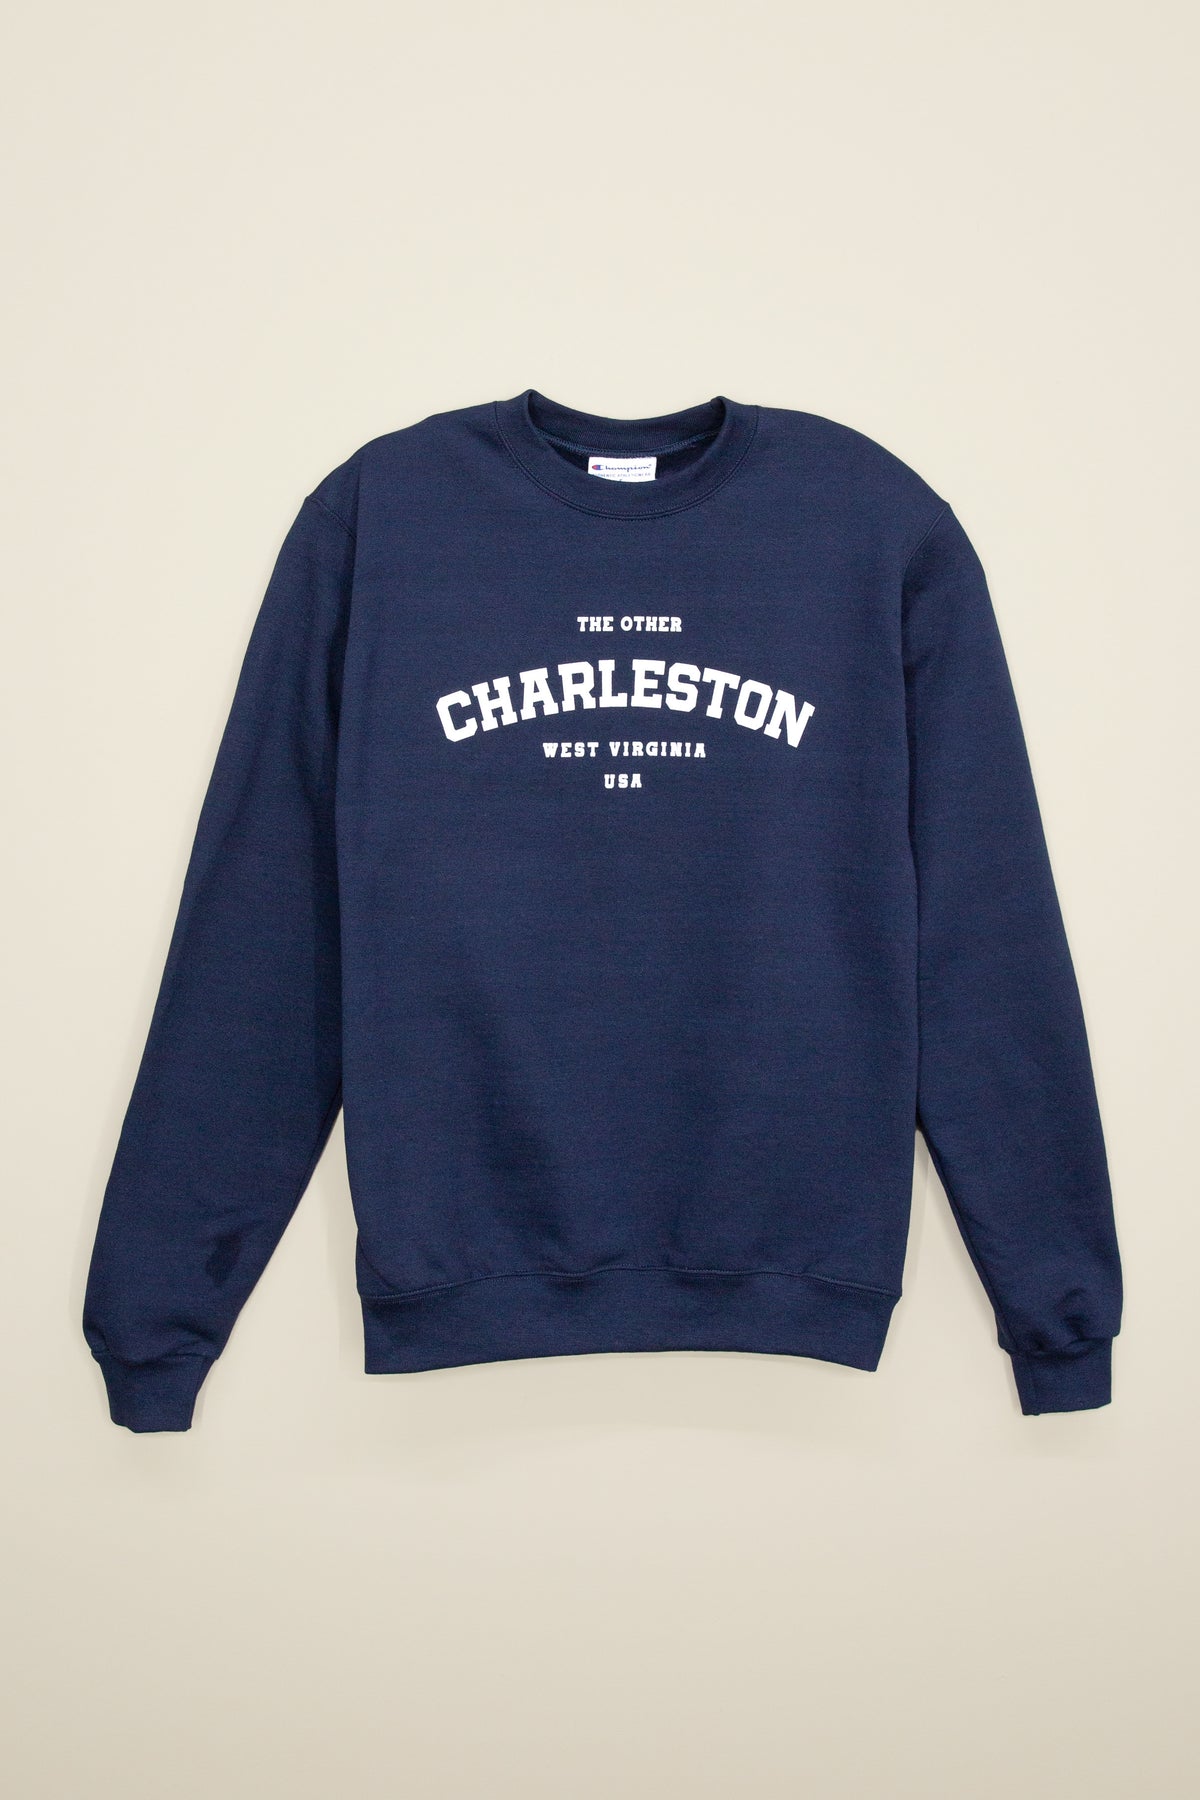 the other charleston sweatshirt